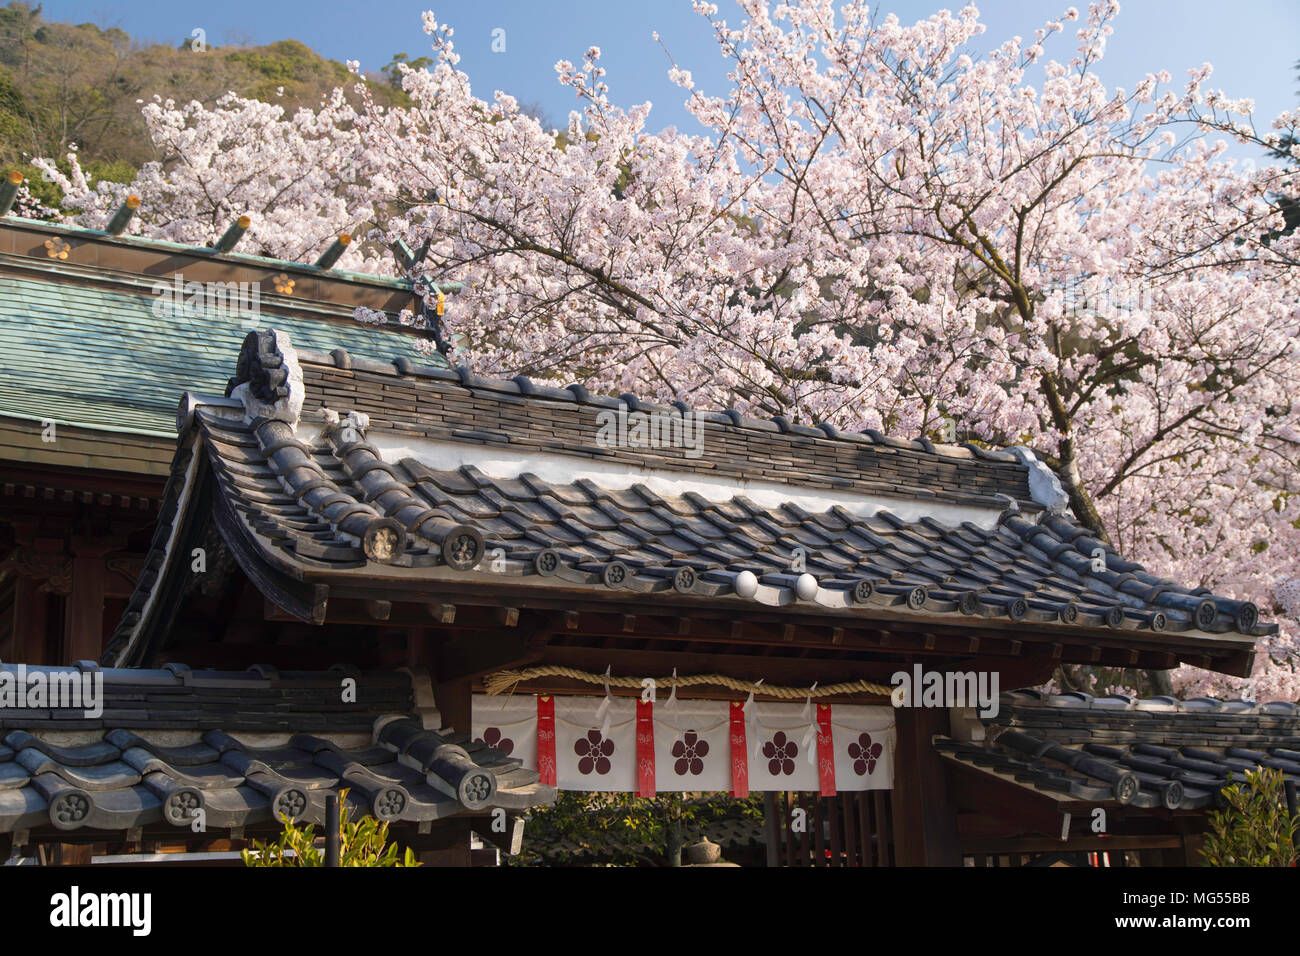 Cherry blossom at Kitano Tenman shrine, Kobe, Kansai, Japan Stock Photo